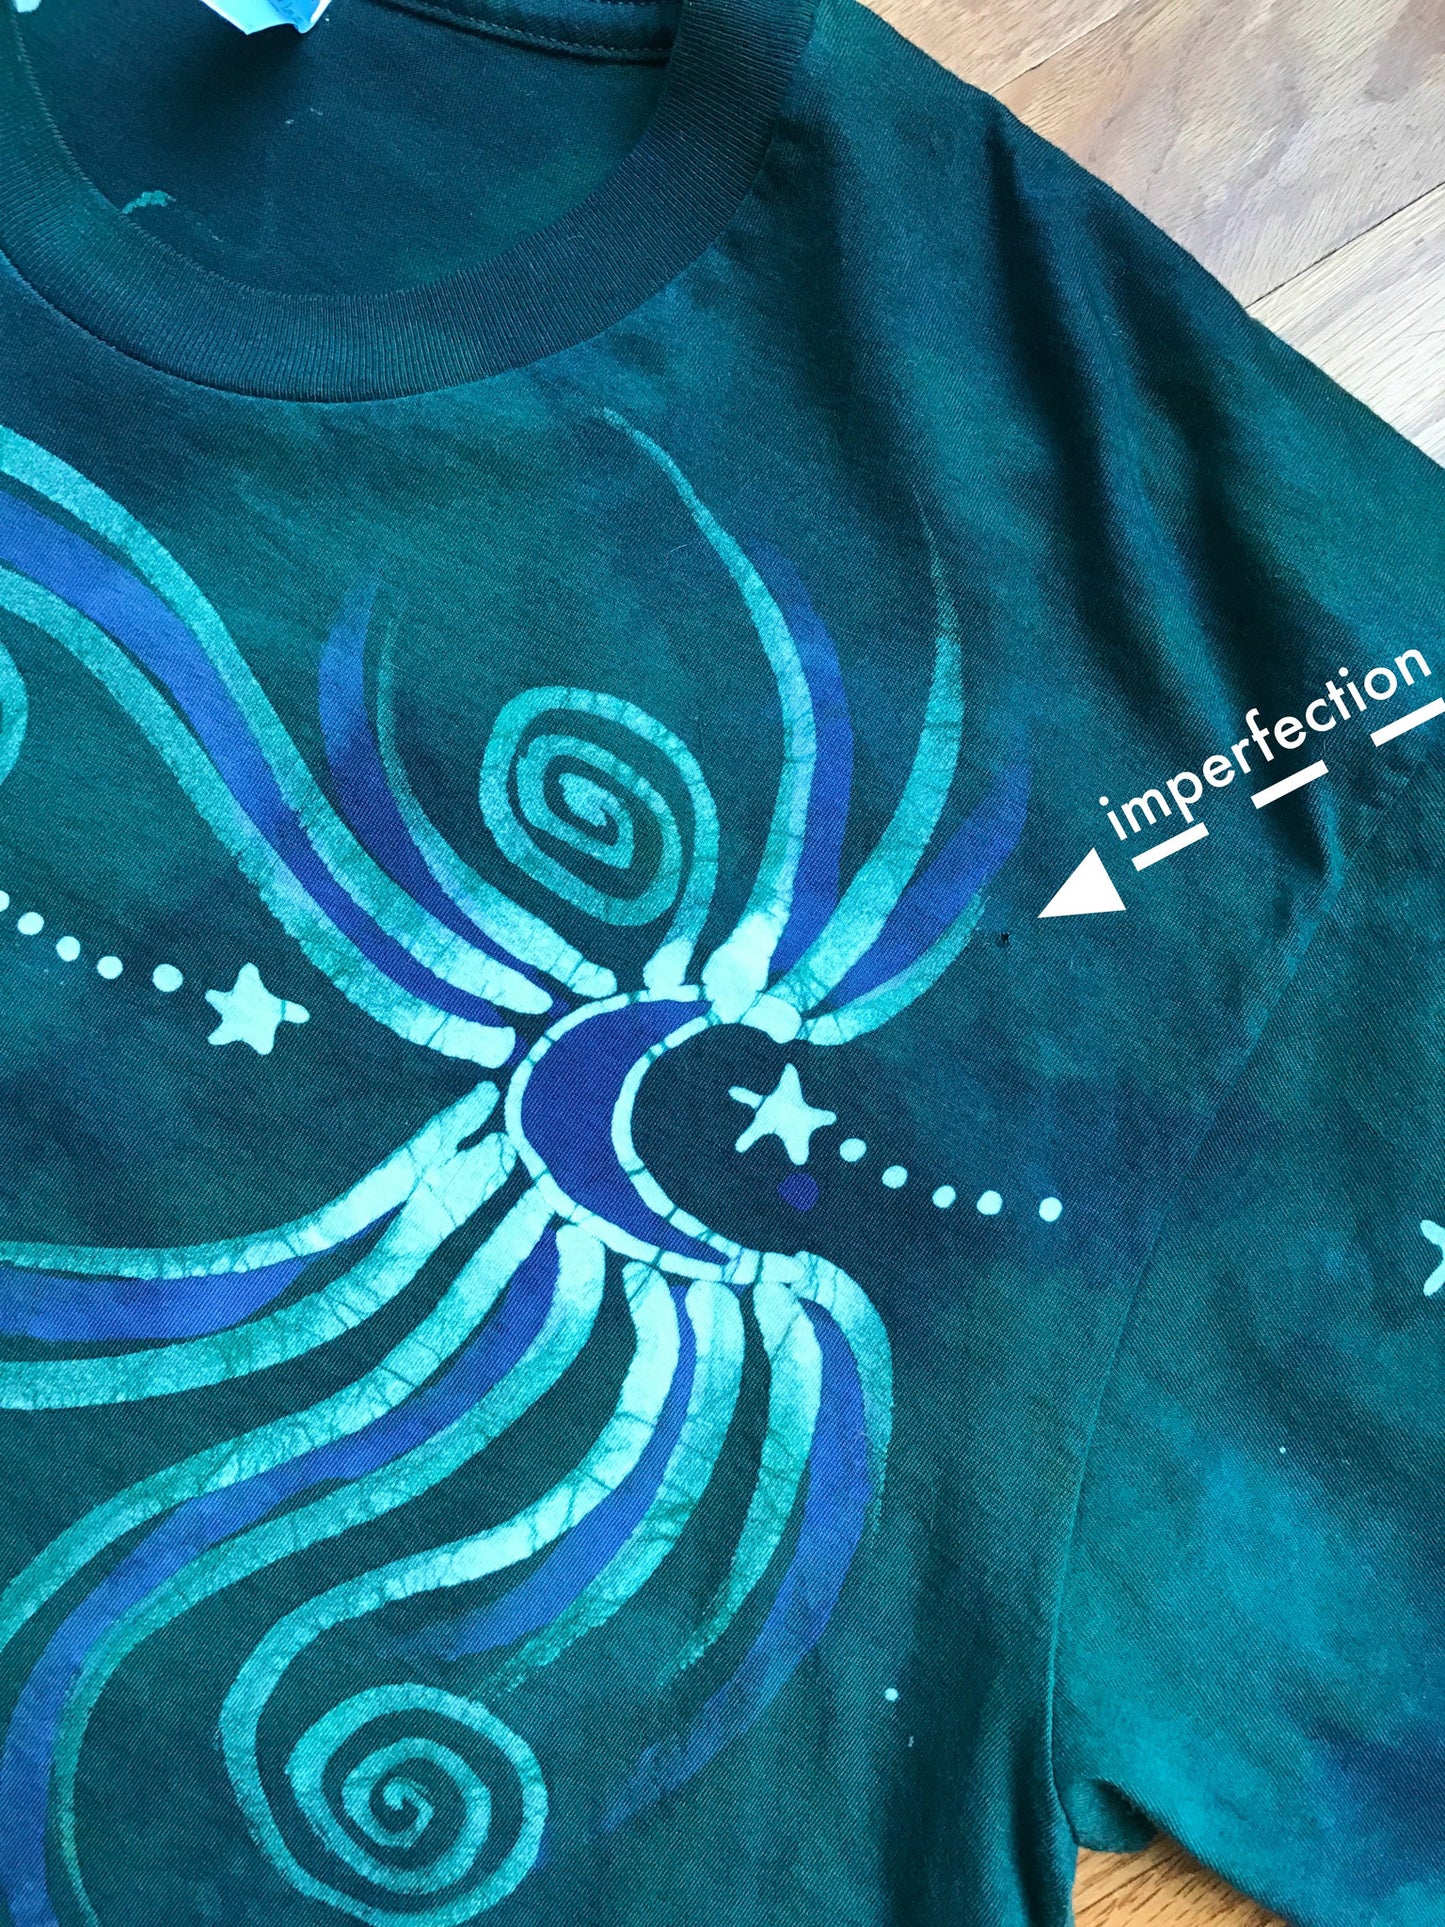 Pretty Star Handmade Batik Tshirt - Slight Imperfection Size XL